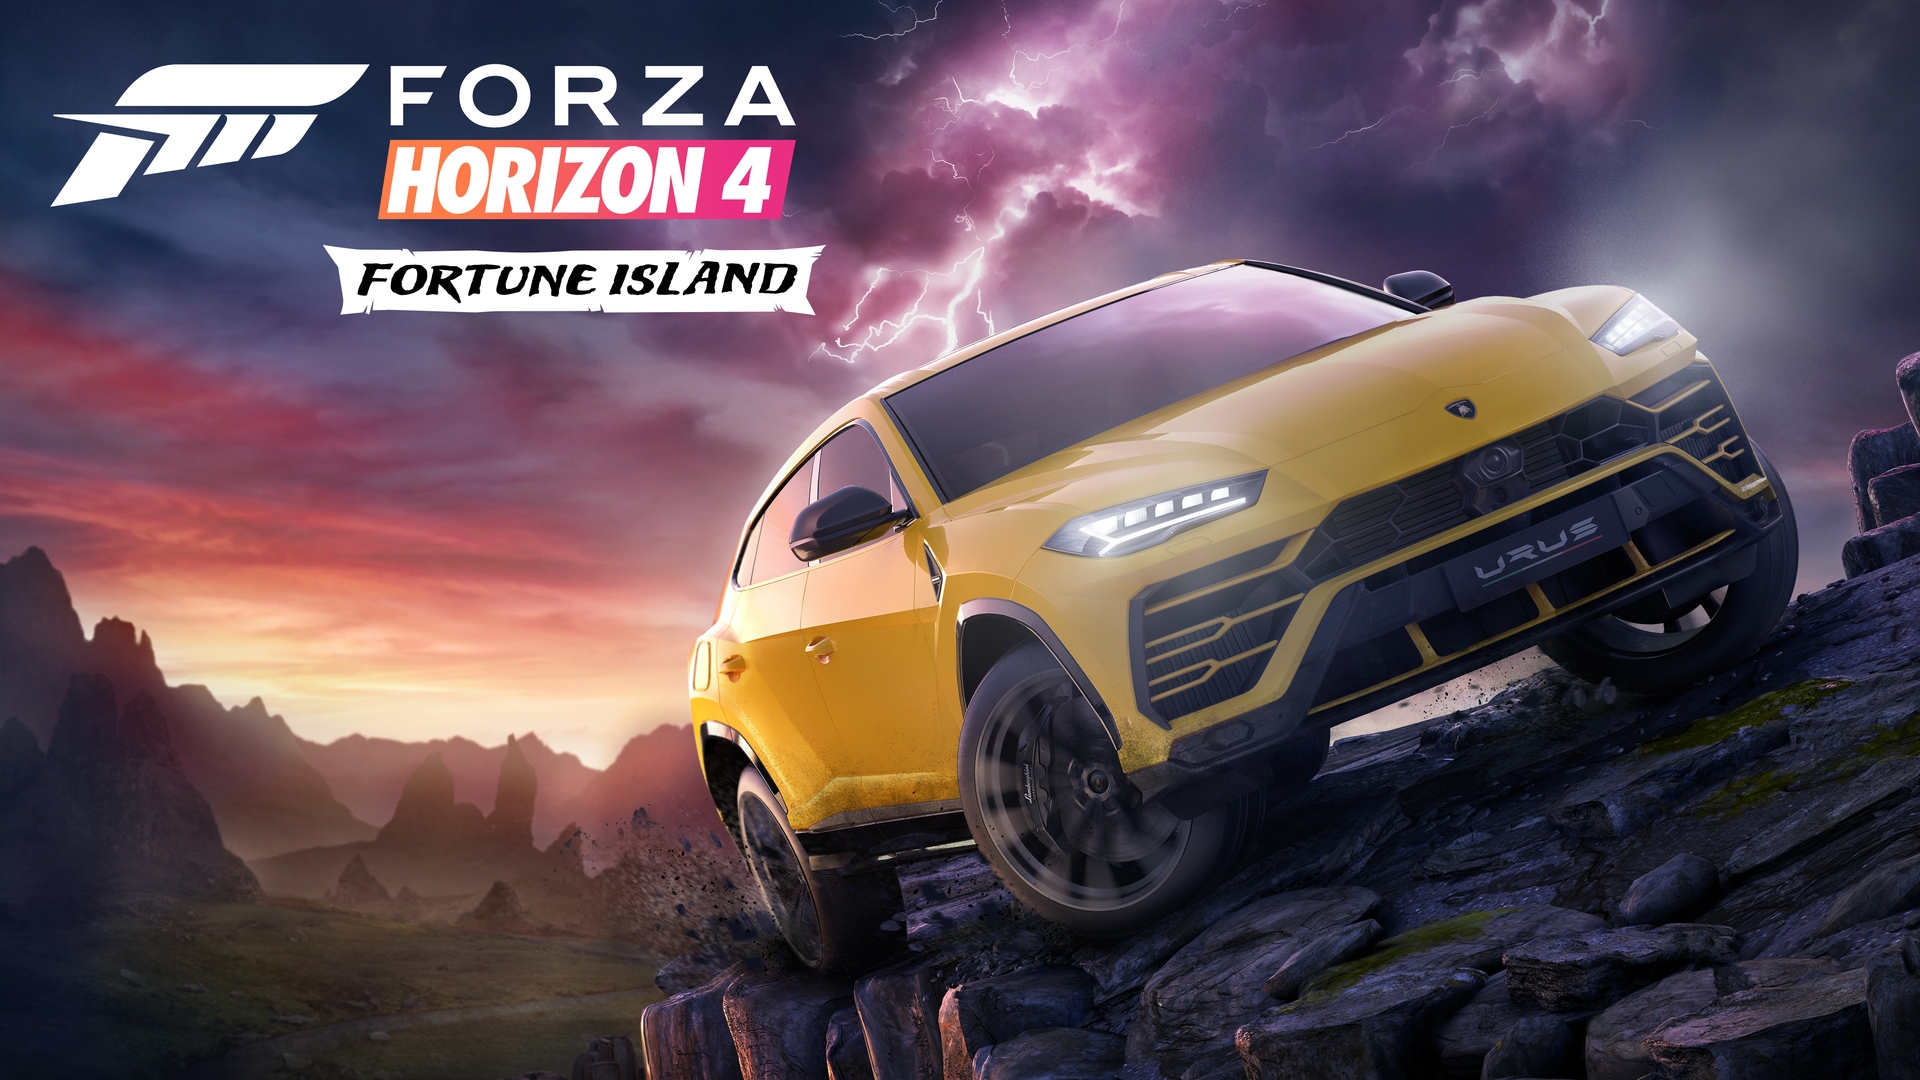 Forza Horizon 4 – Fortune Island